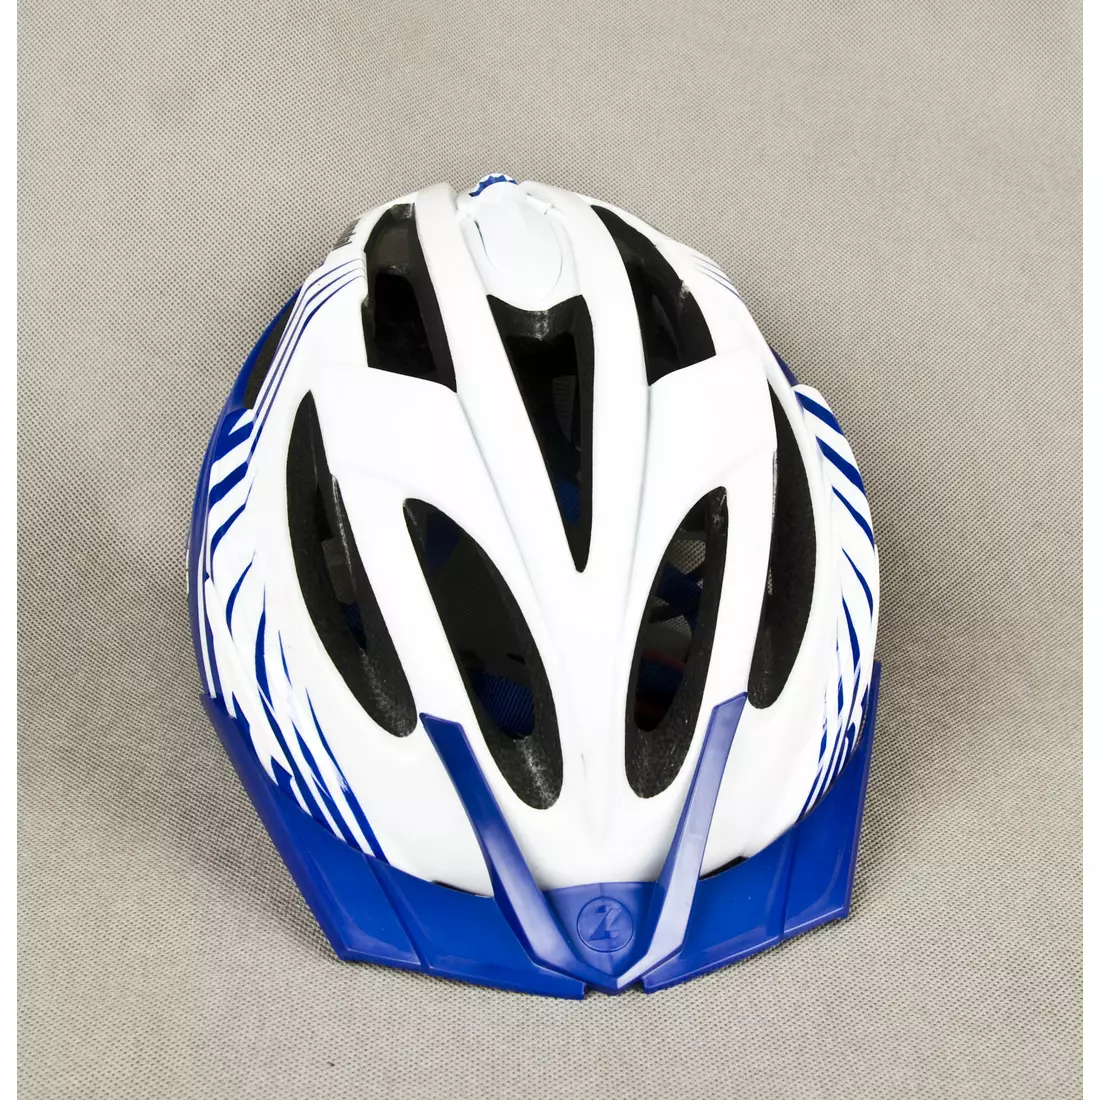 LAZER VANDAL MTB bicycle helmet blue and white